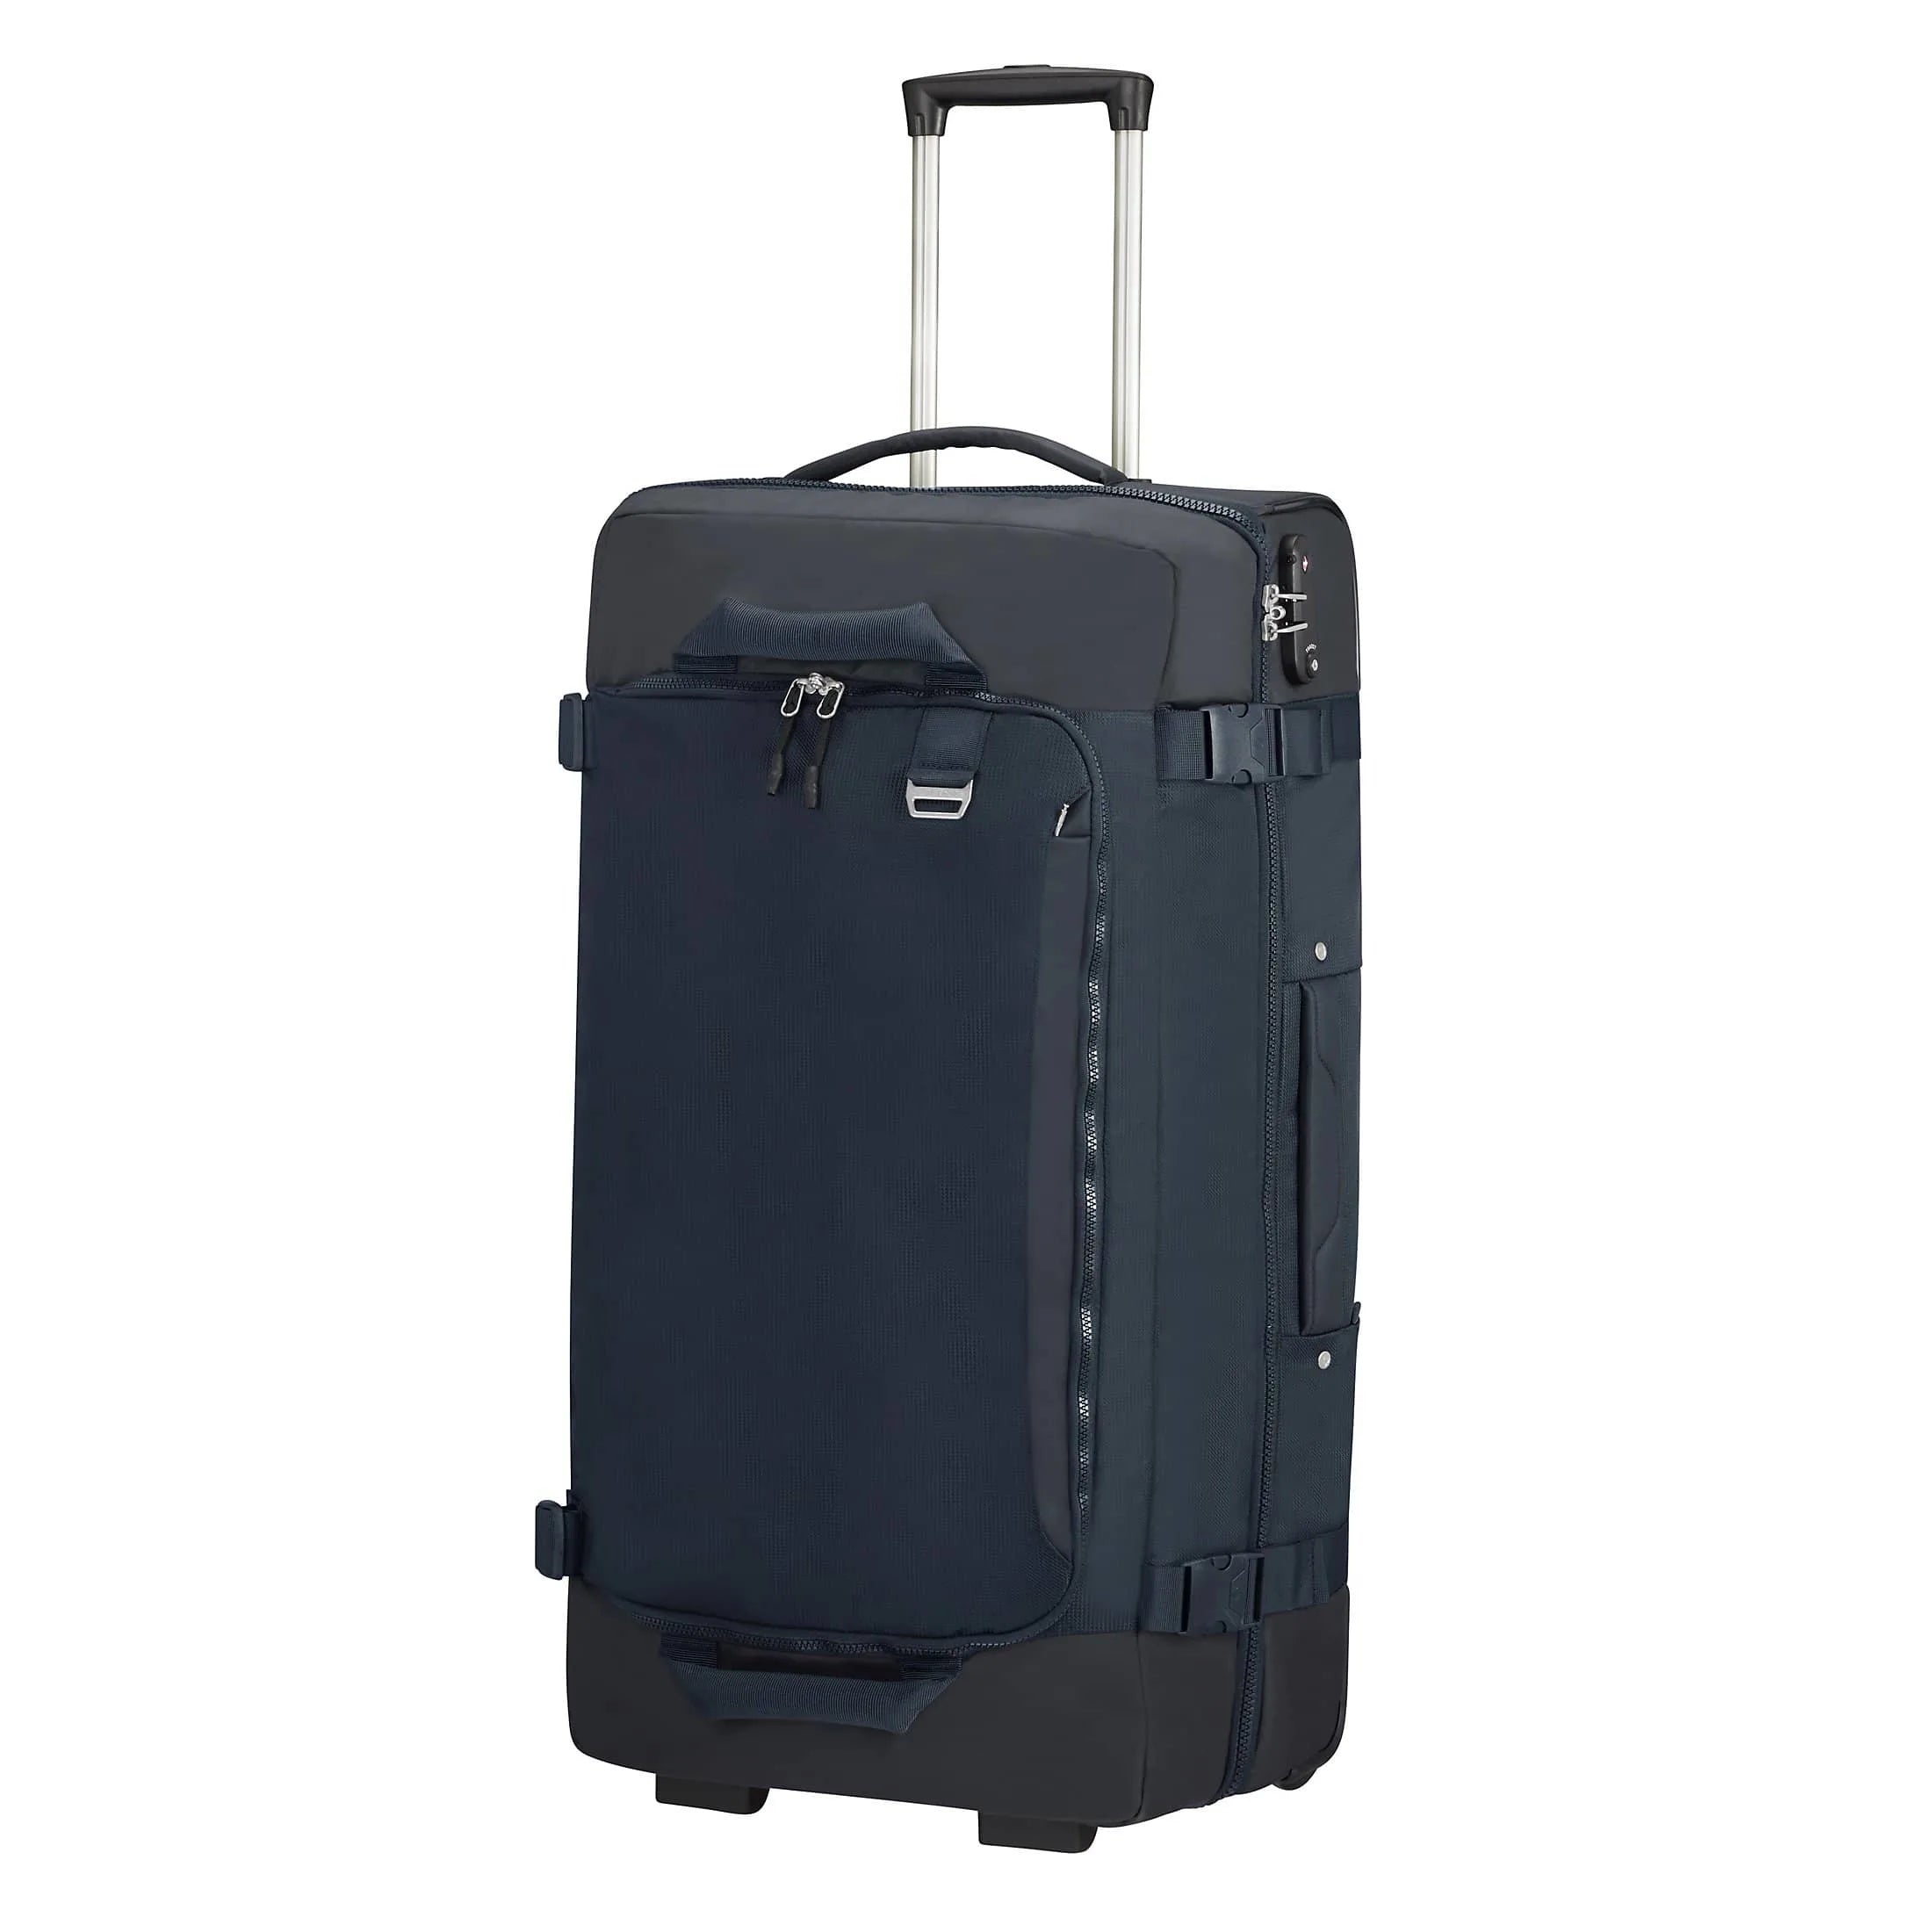 Samsonite Midtown Duffle travel bag with wheels 79 cm - Dark Blue